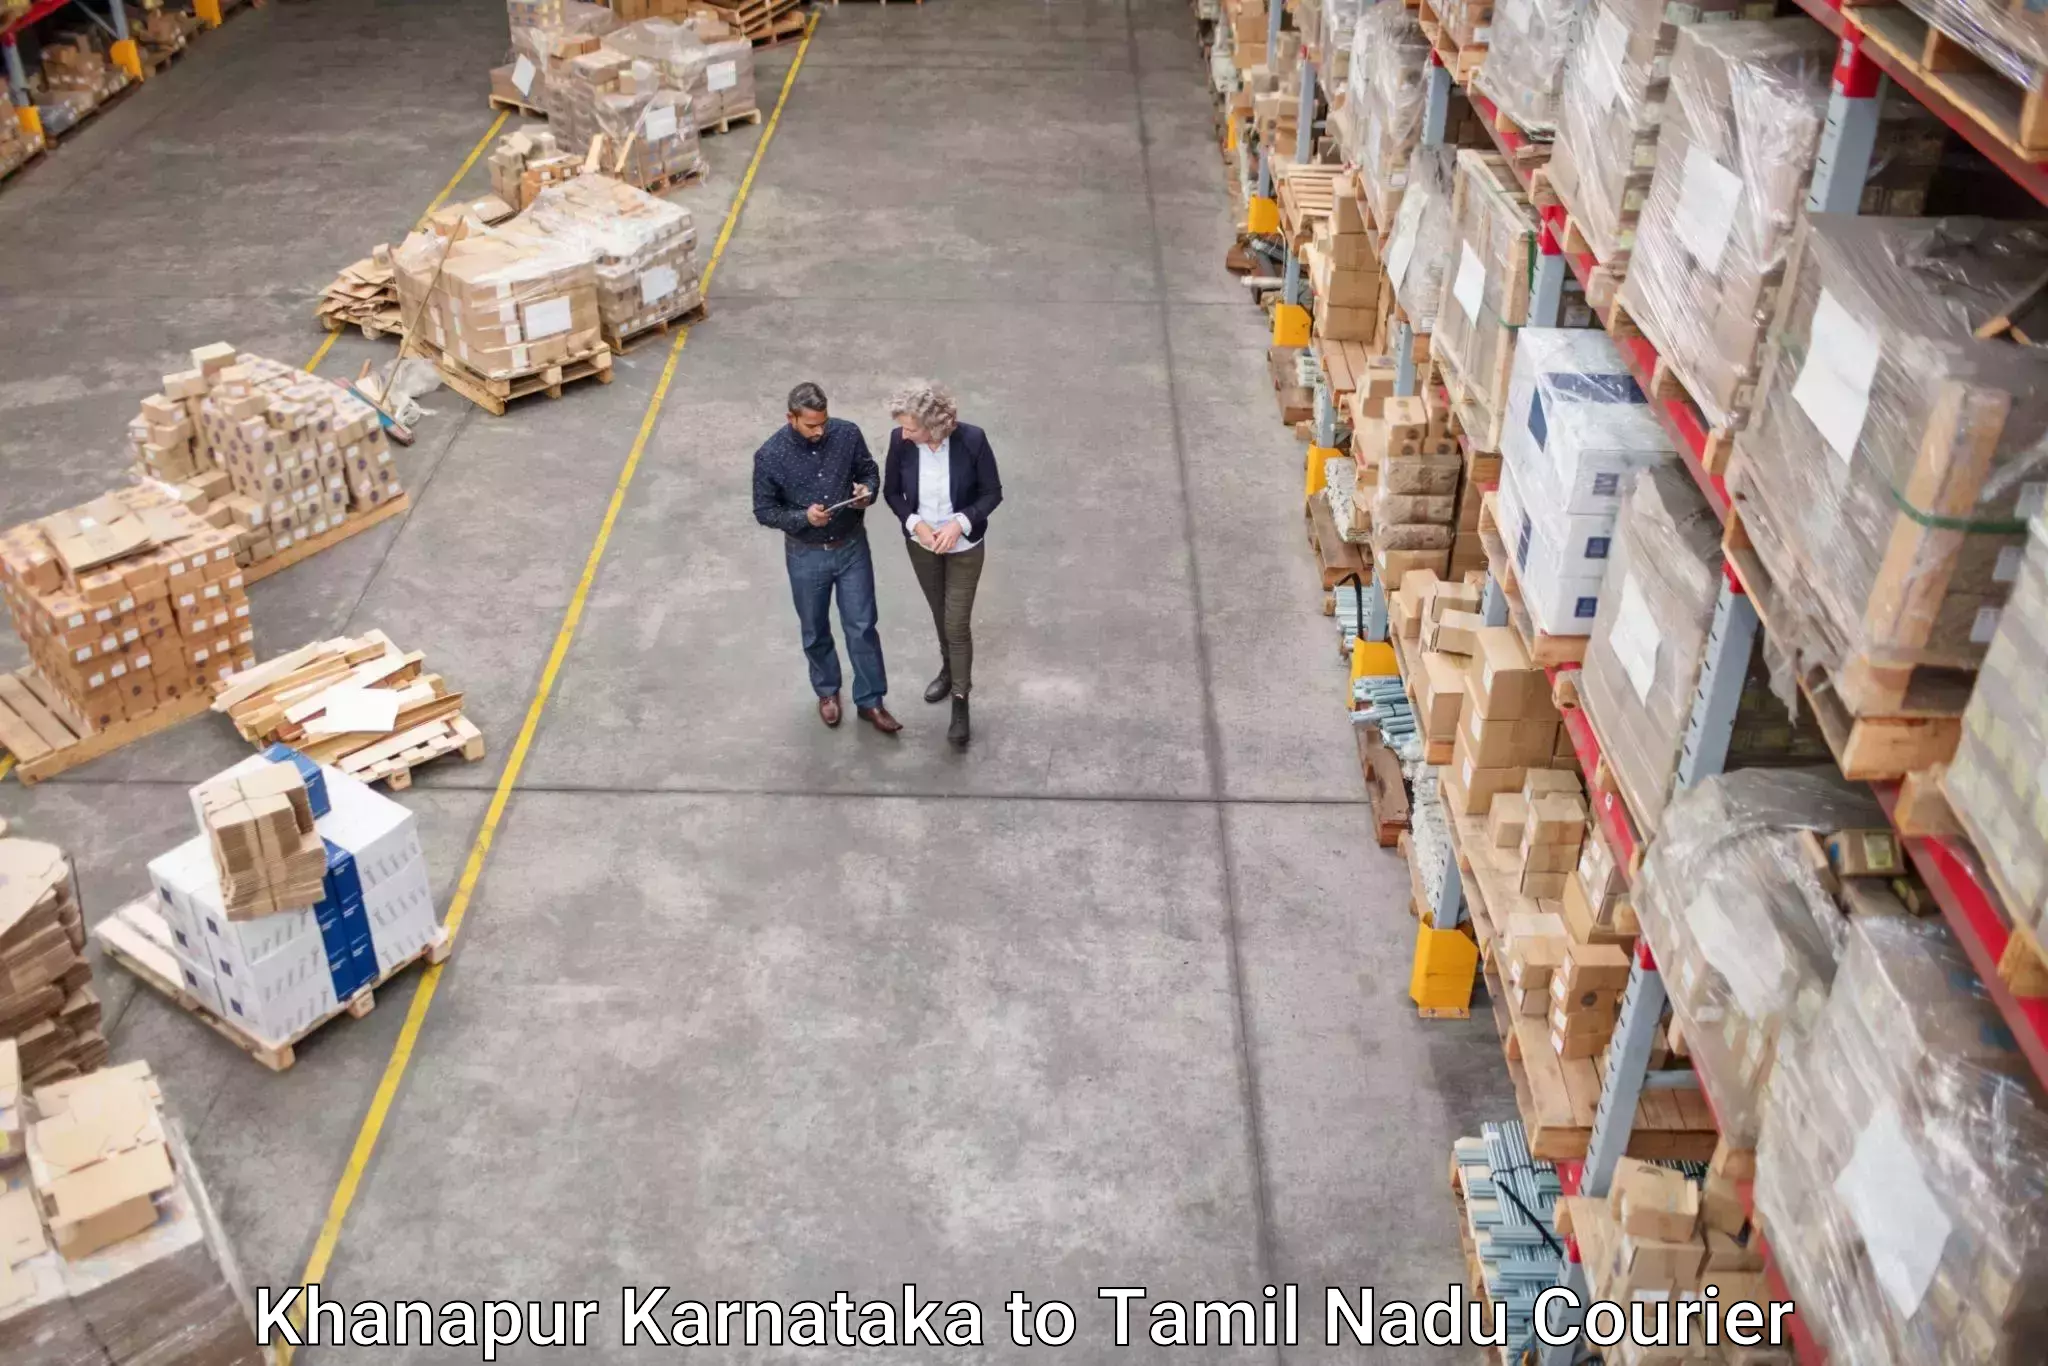 Reliable courier services Khanapur Karnataka to Kanchipuram